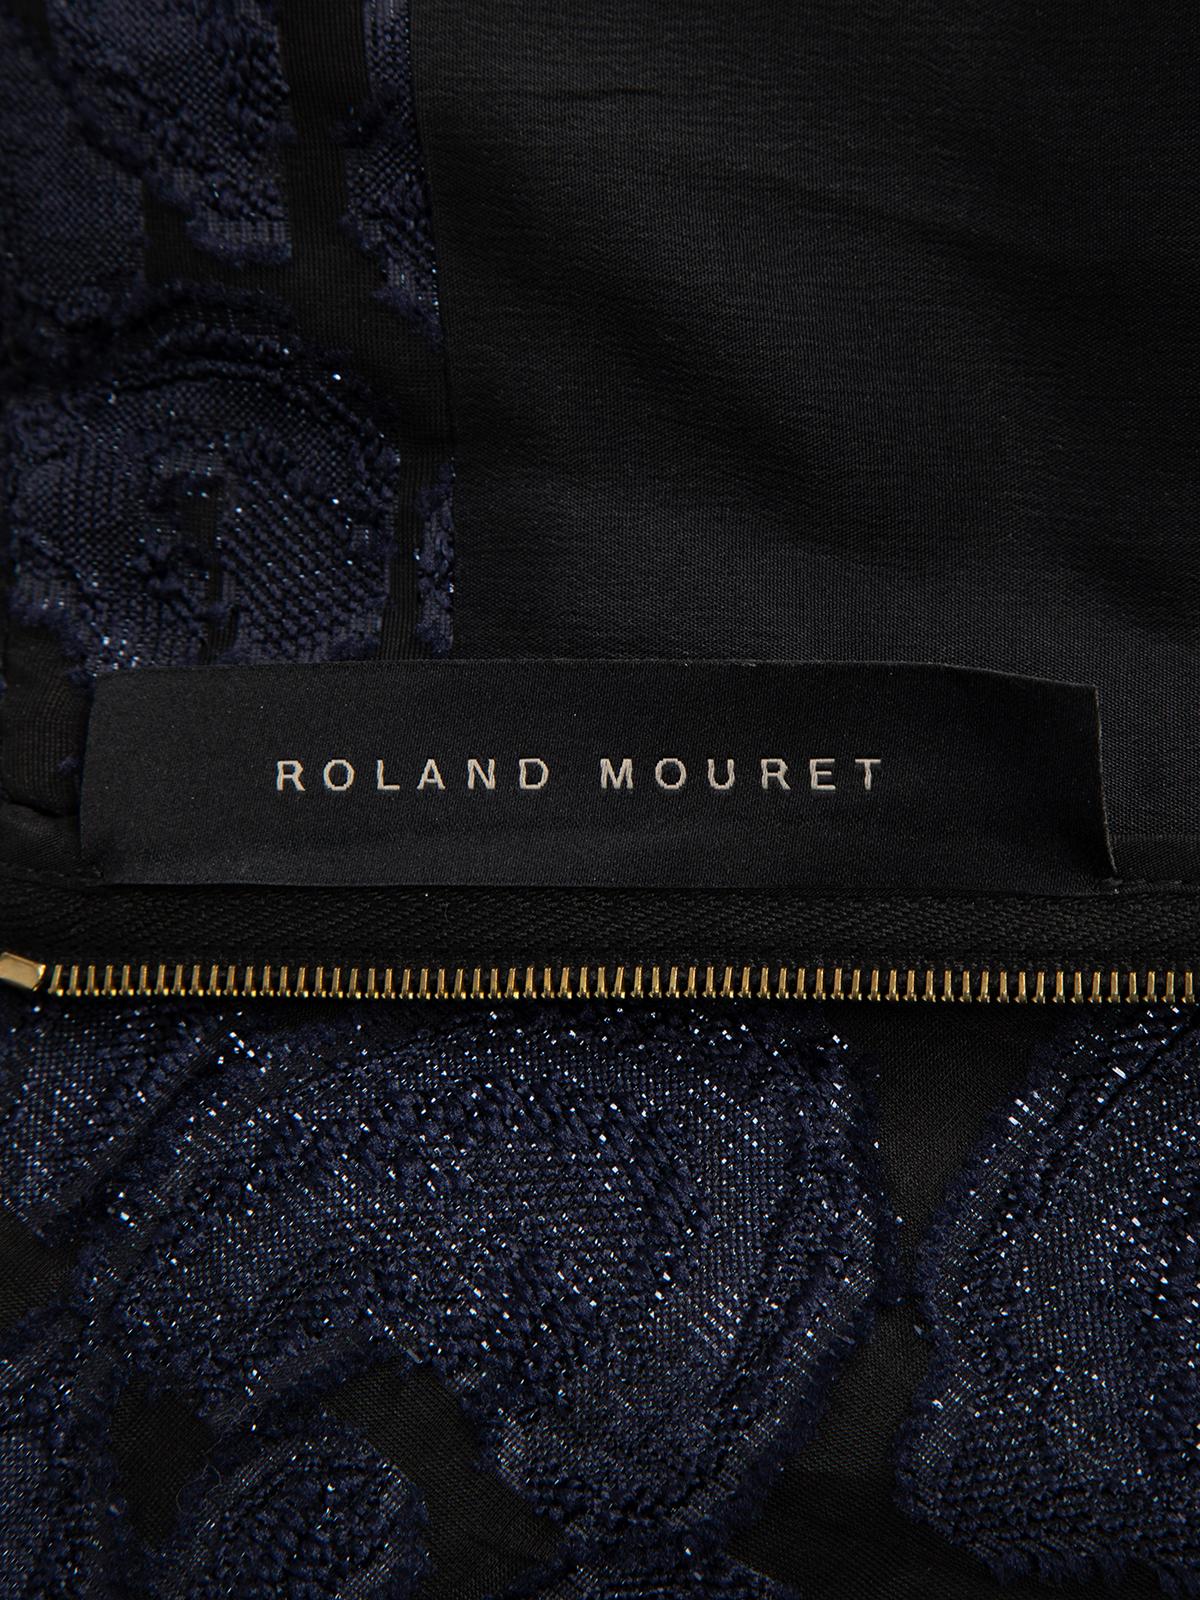 Roland Mouret Women's Strapless Lace Metallic Formal Dress For Sale 2